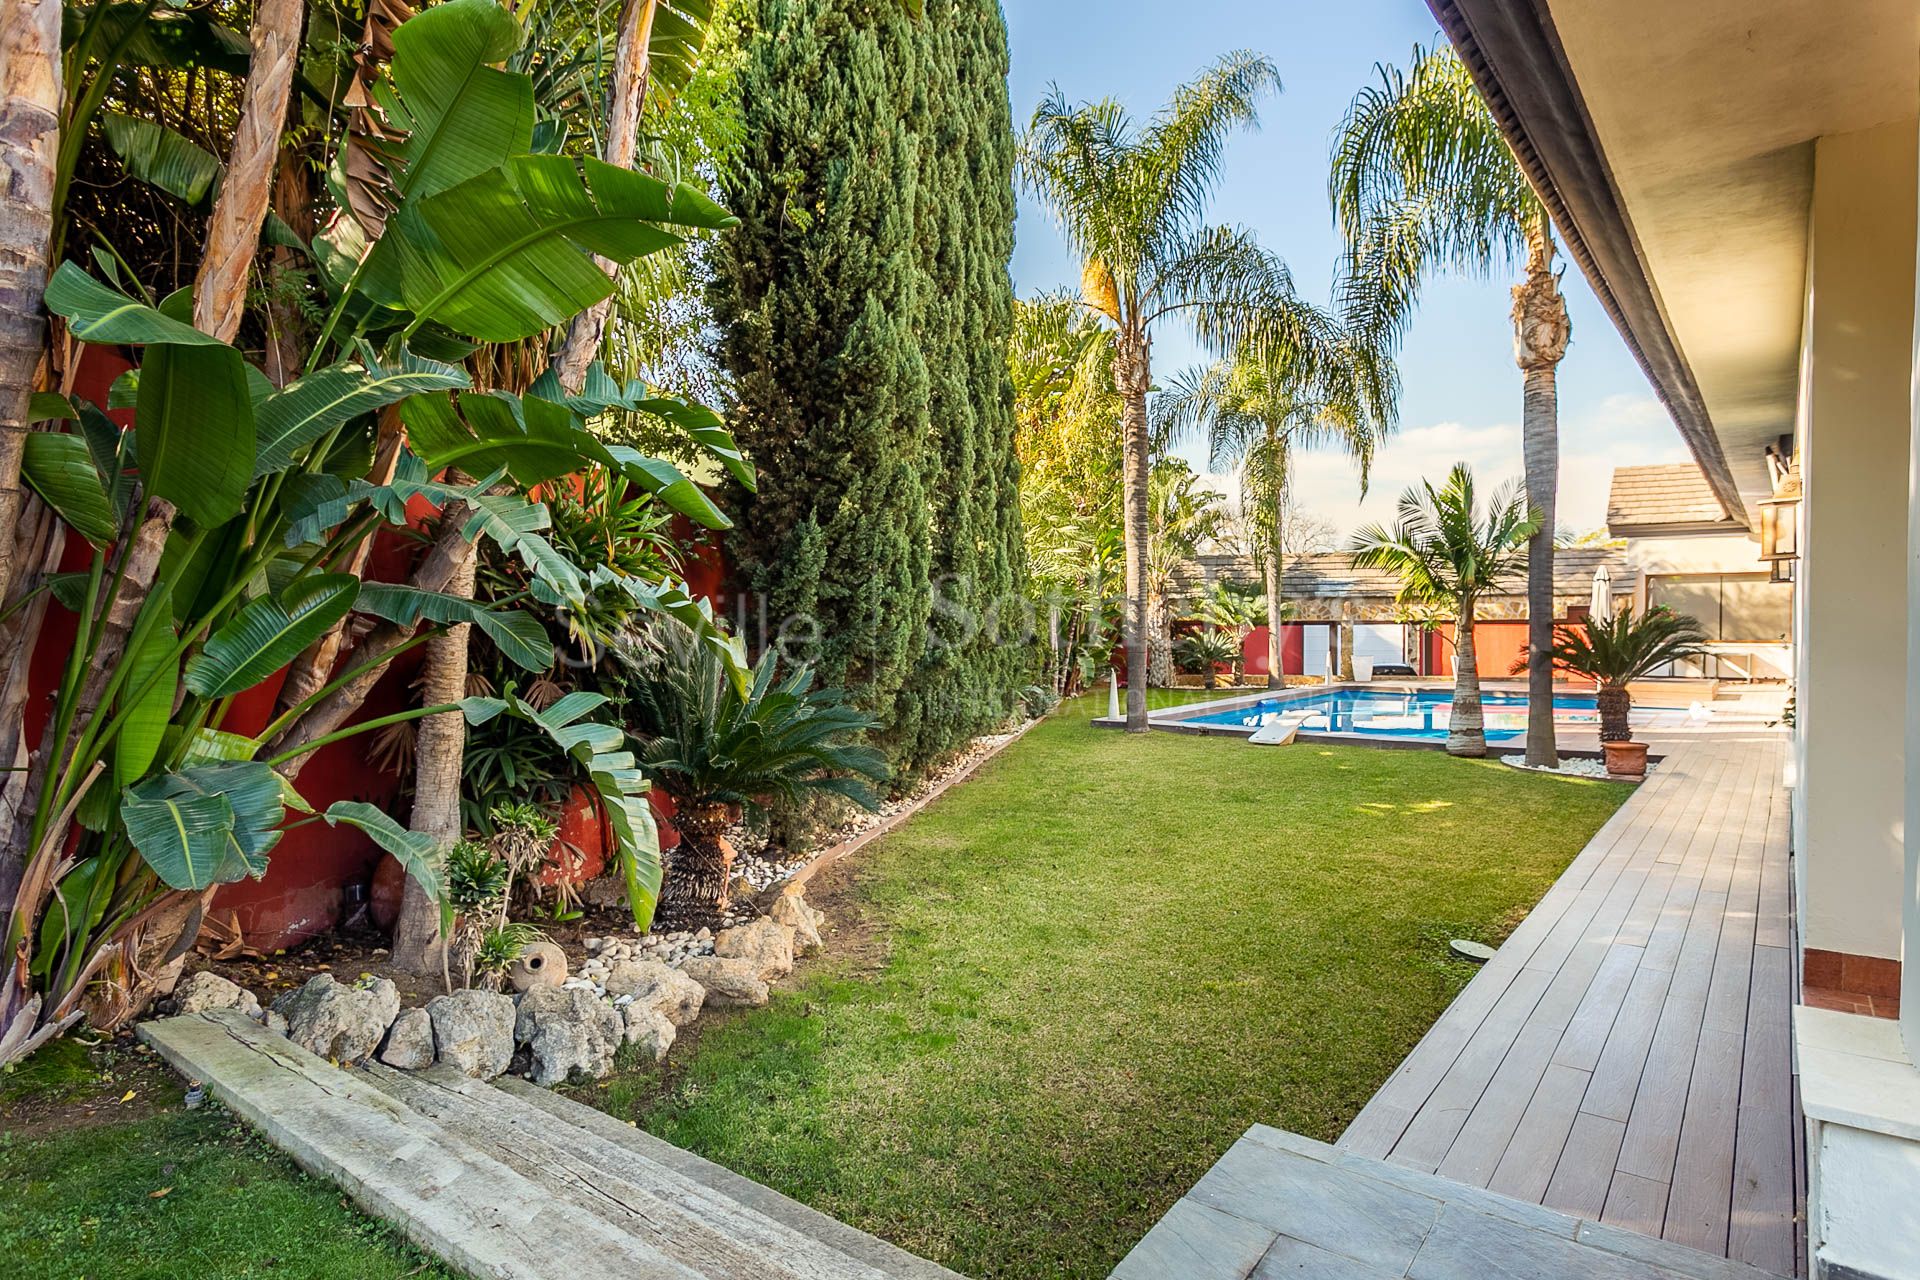 Detached designer villa in Simón Verde with garden and swimming pool